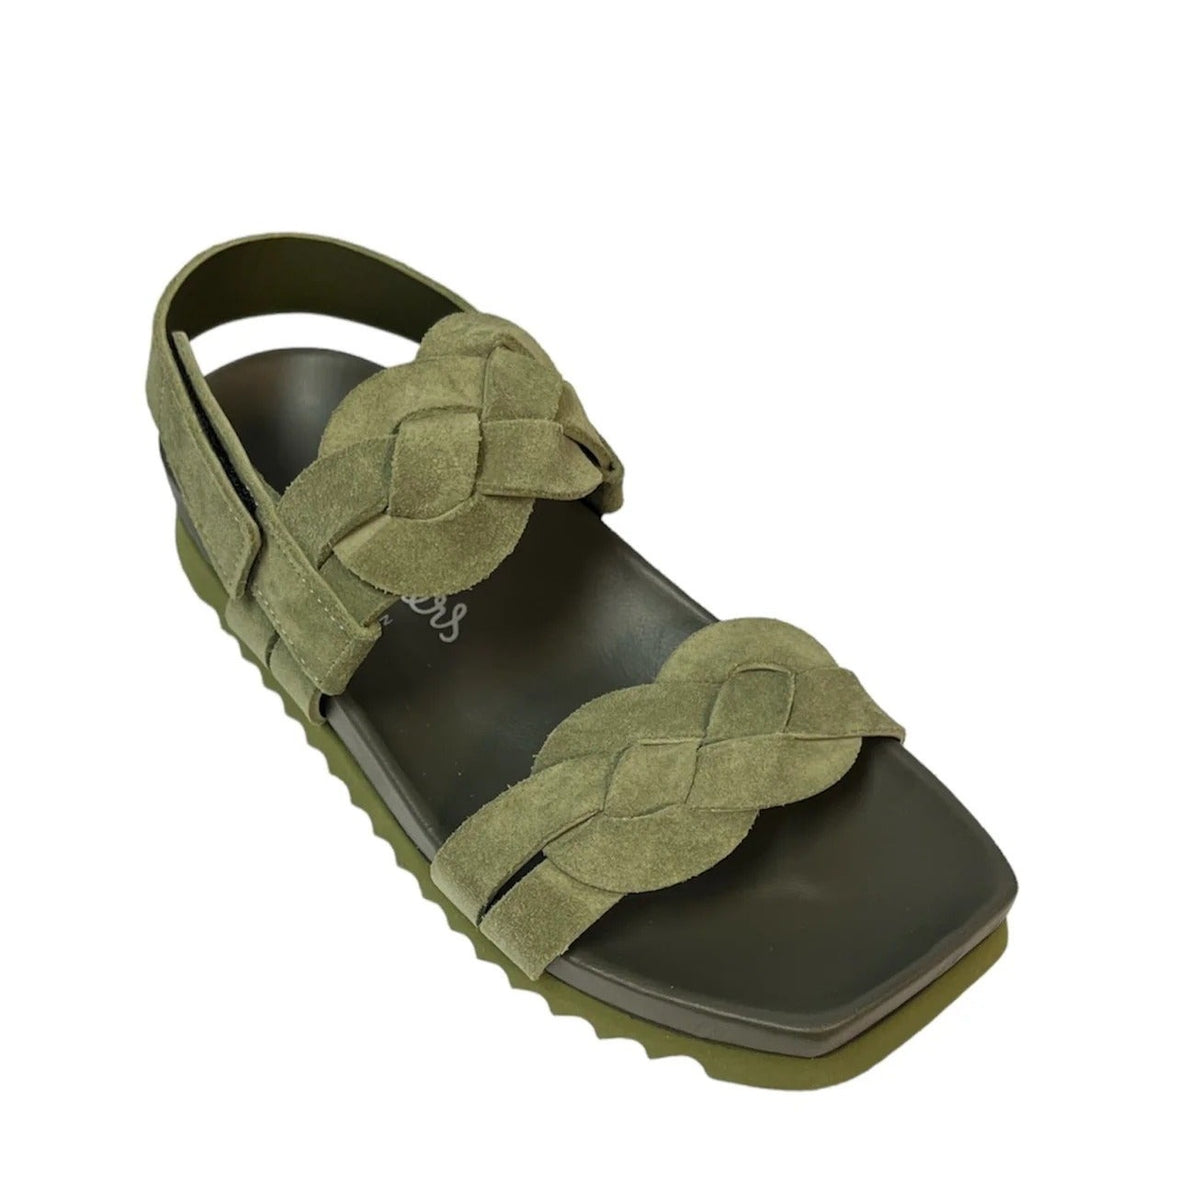 Woodland Men's Green Leather Sandal-6 UK (40 EU) (GD 2183116) : Amazon.in:  Fashion